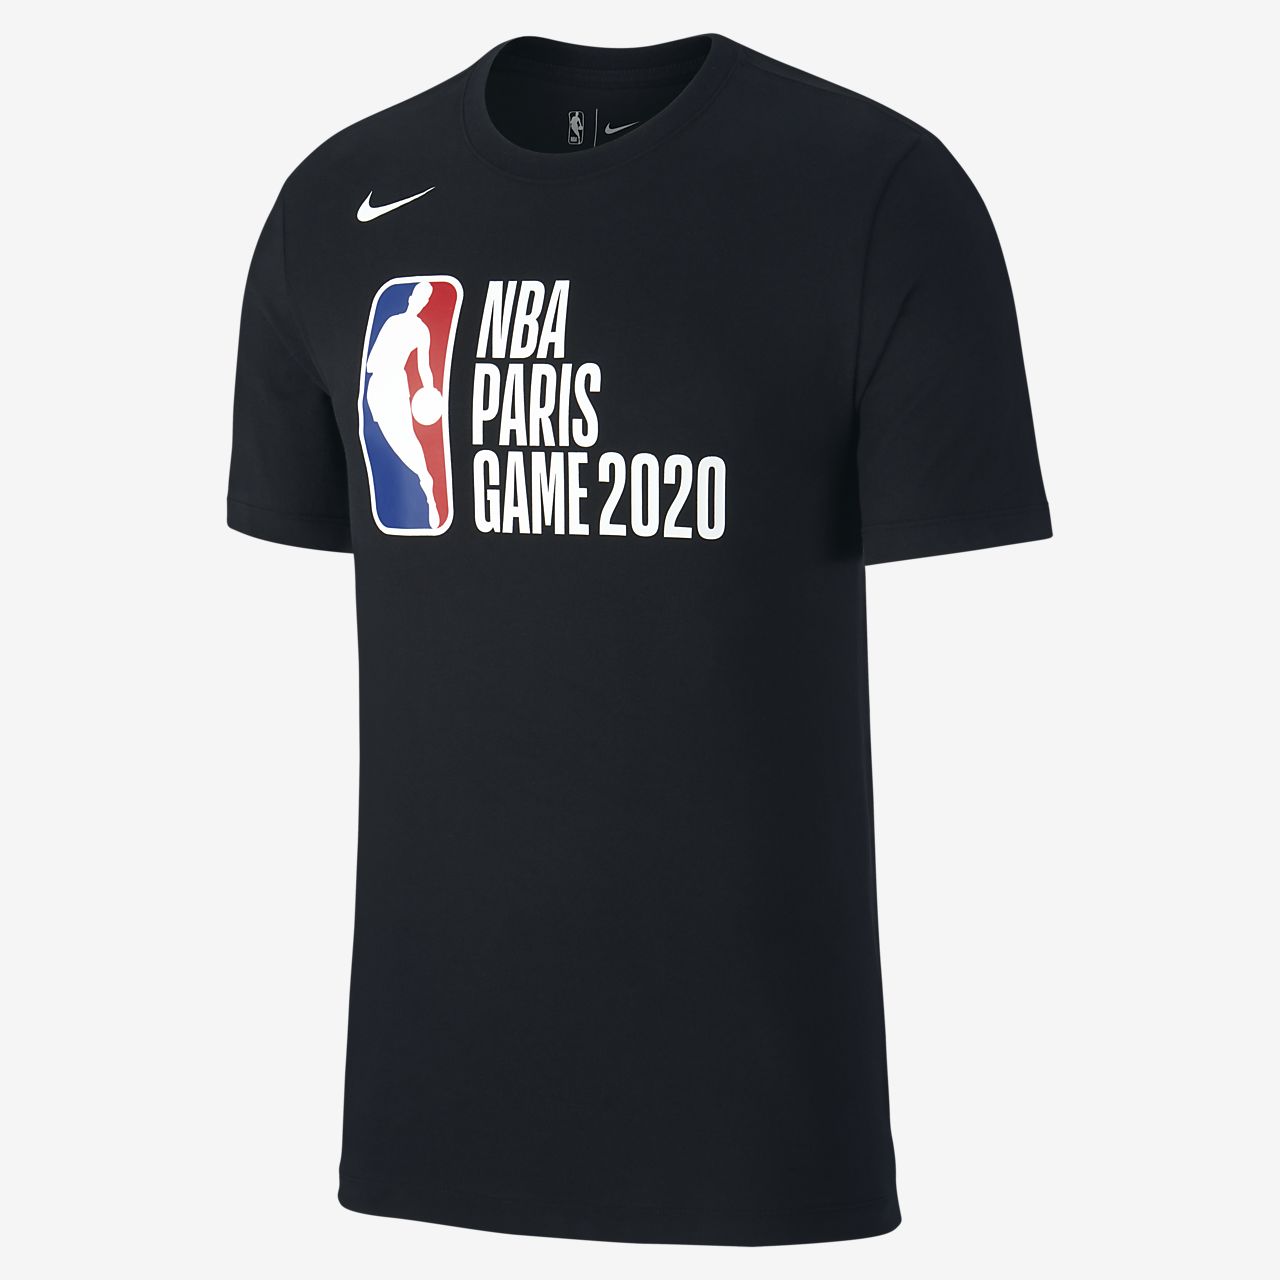 Playera para hombre Nike NBA Paris Game 2020. Nike MX